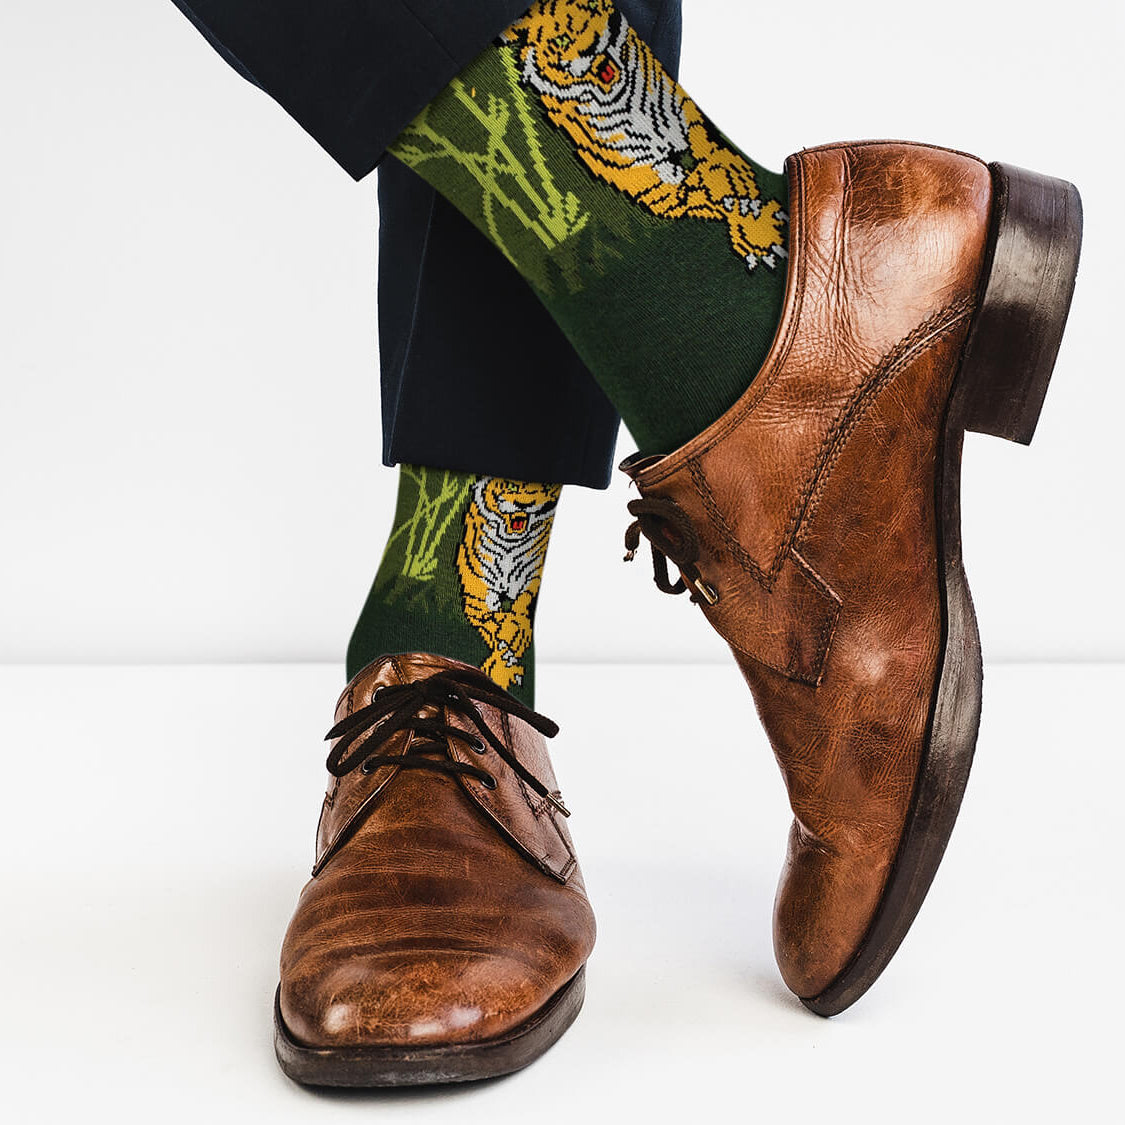 Real Sic - Tiger Green Socks